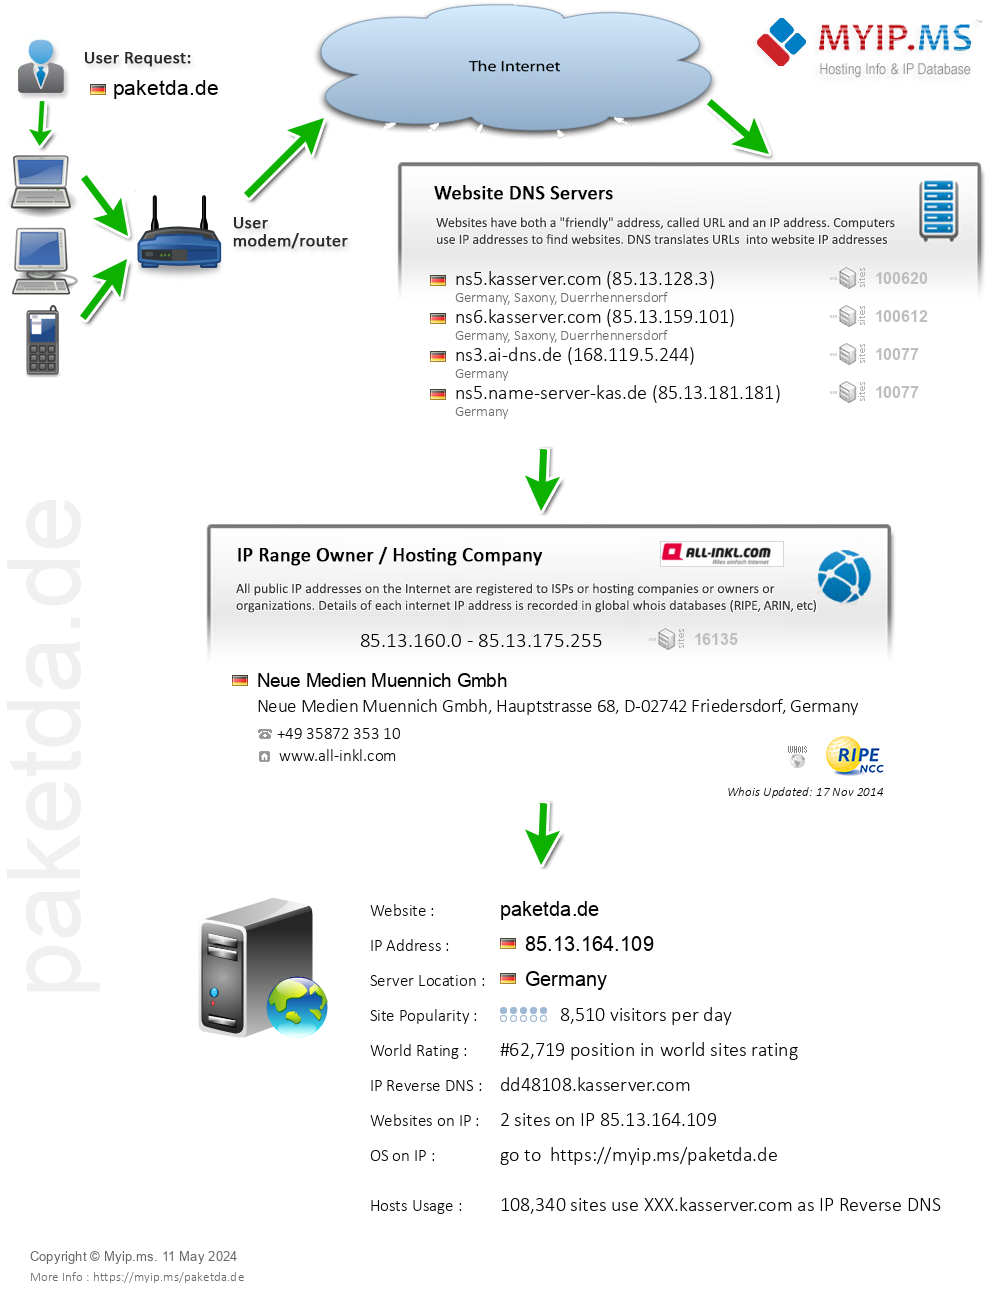 Paketda.de - Website Hosting Visual IP Diagram